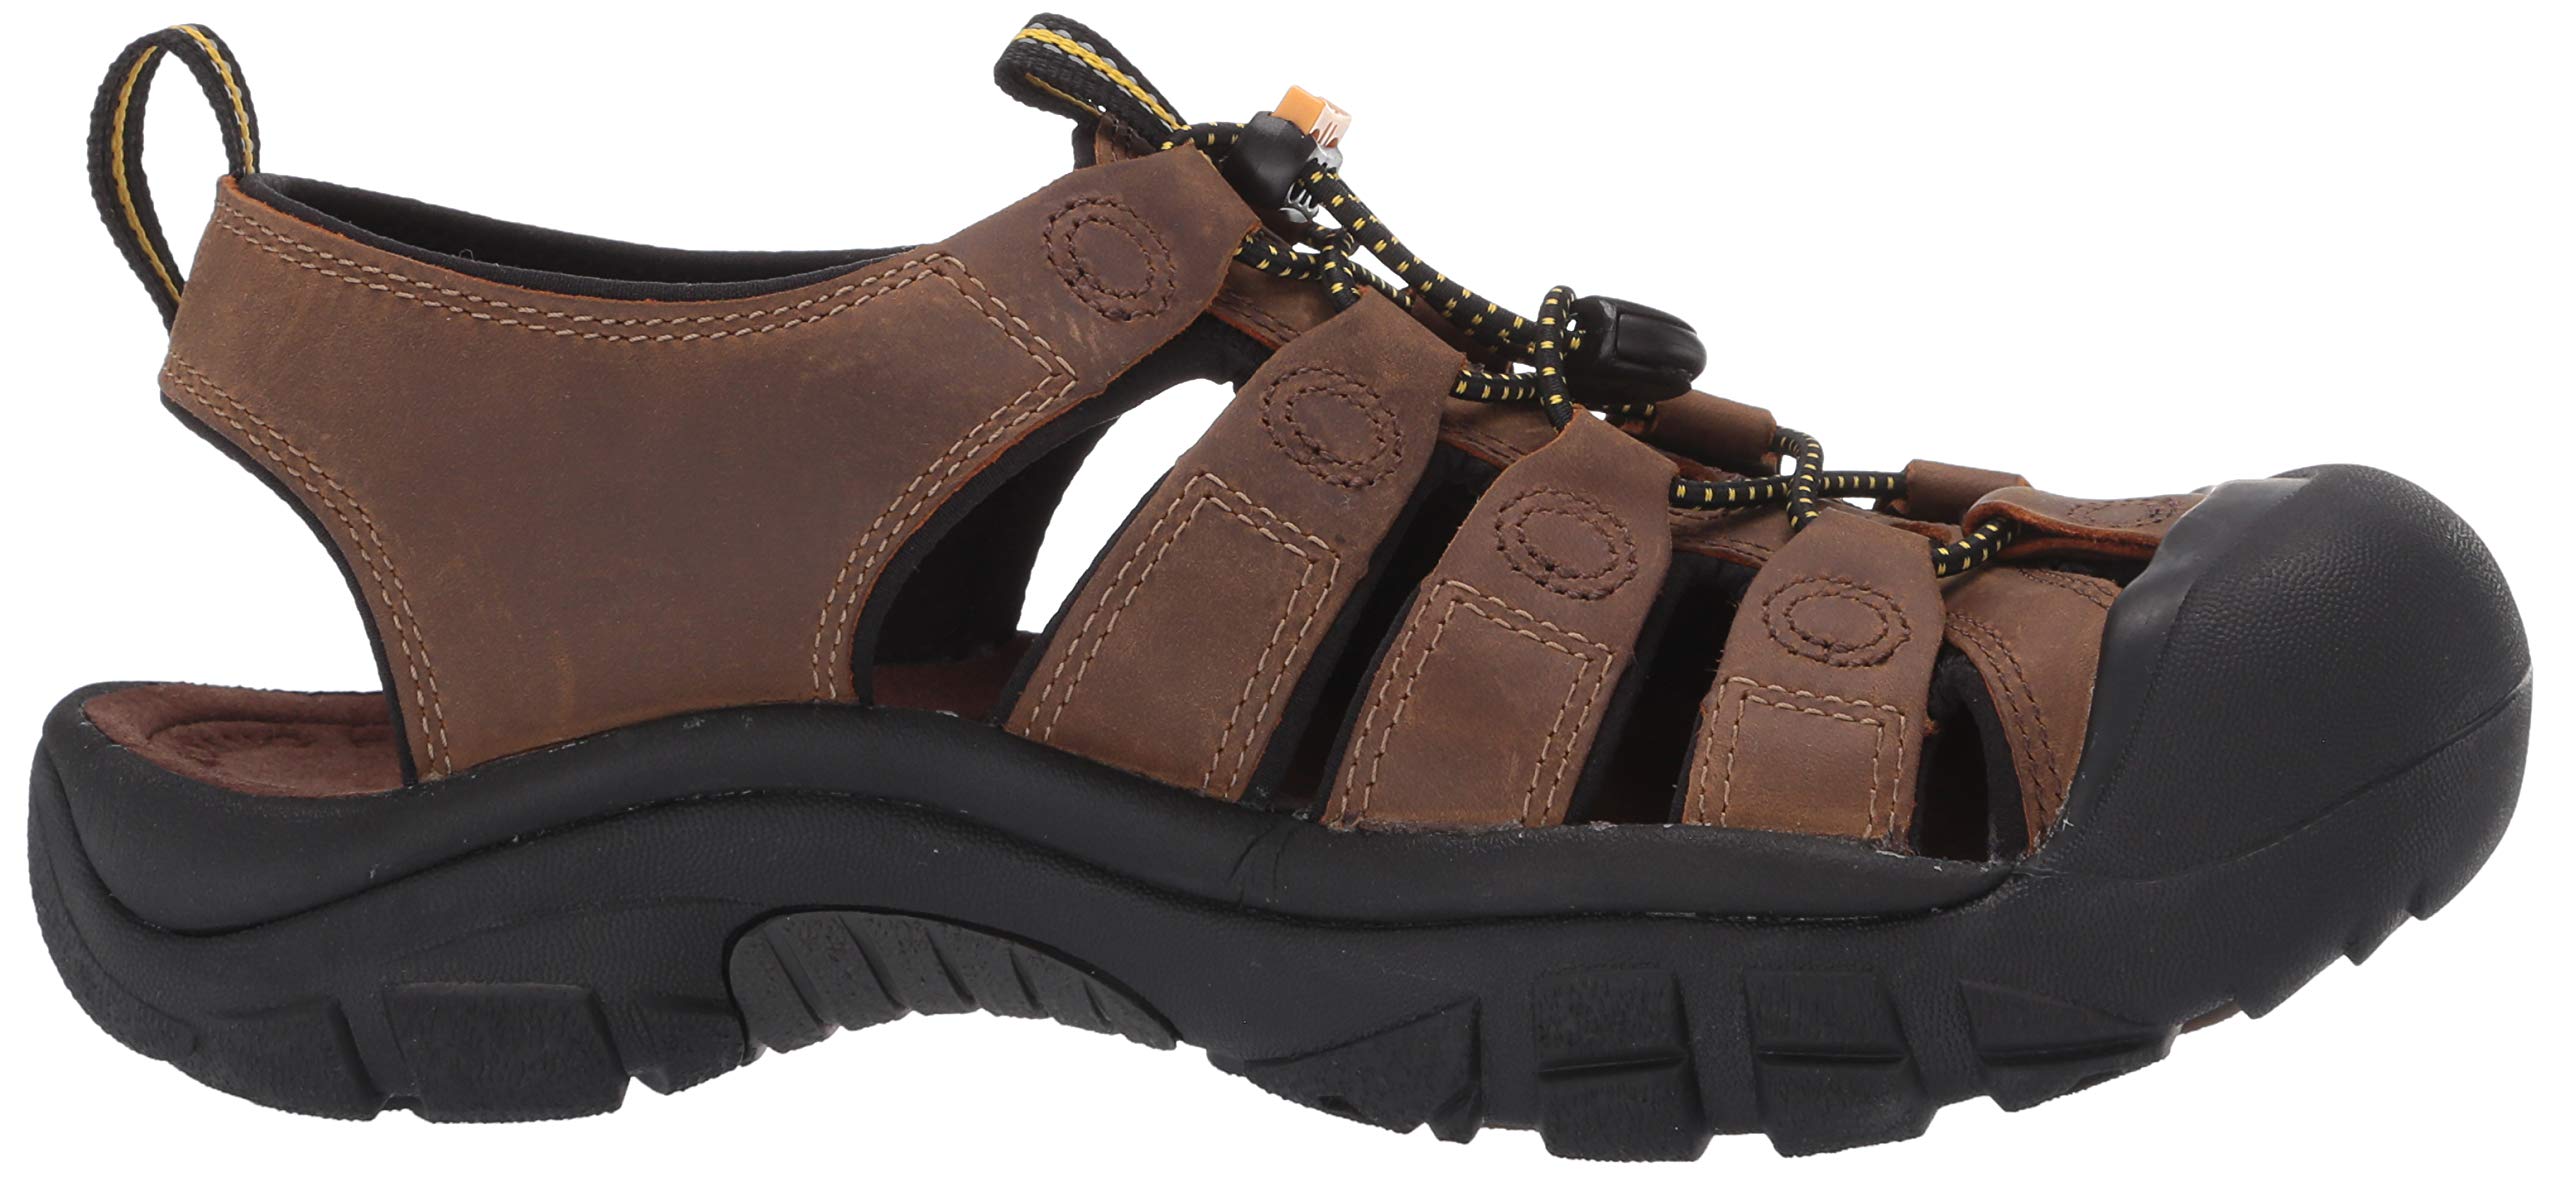 KEEN Men's Newport Closed Toe Leather Sandals, 12